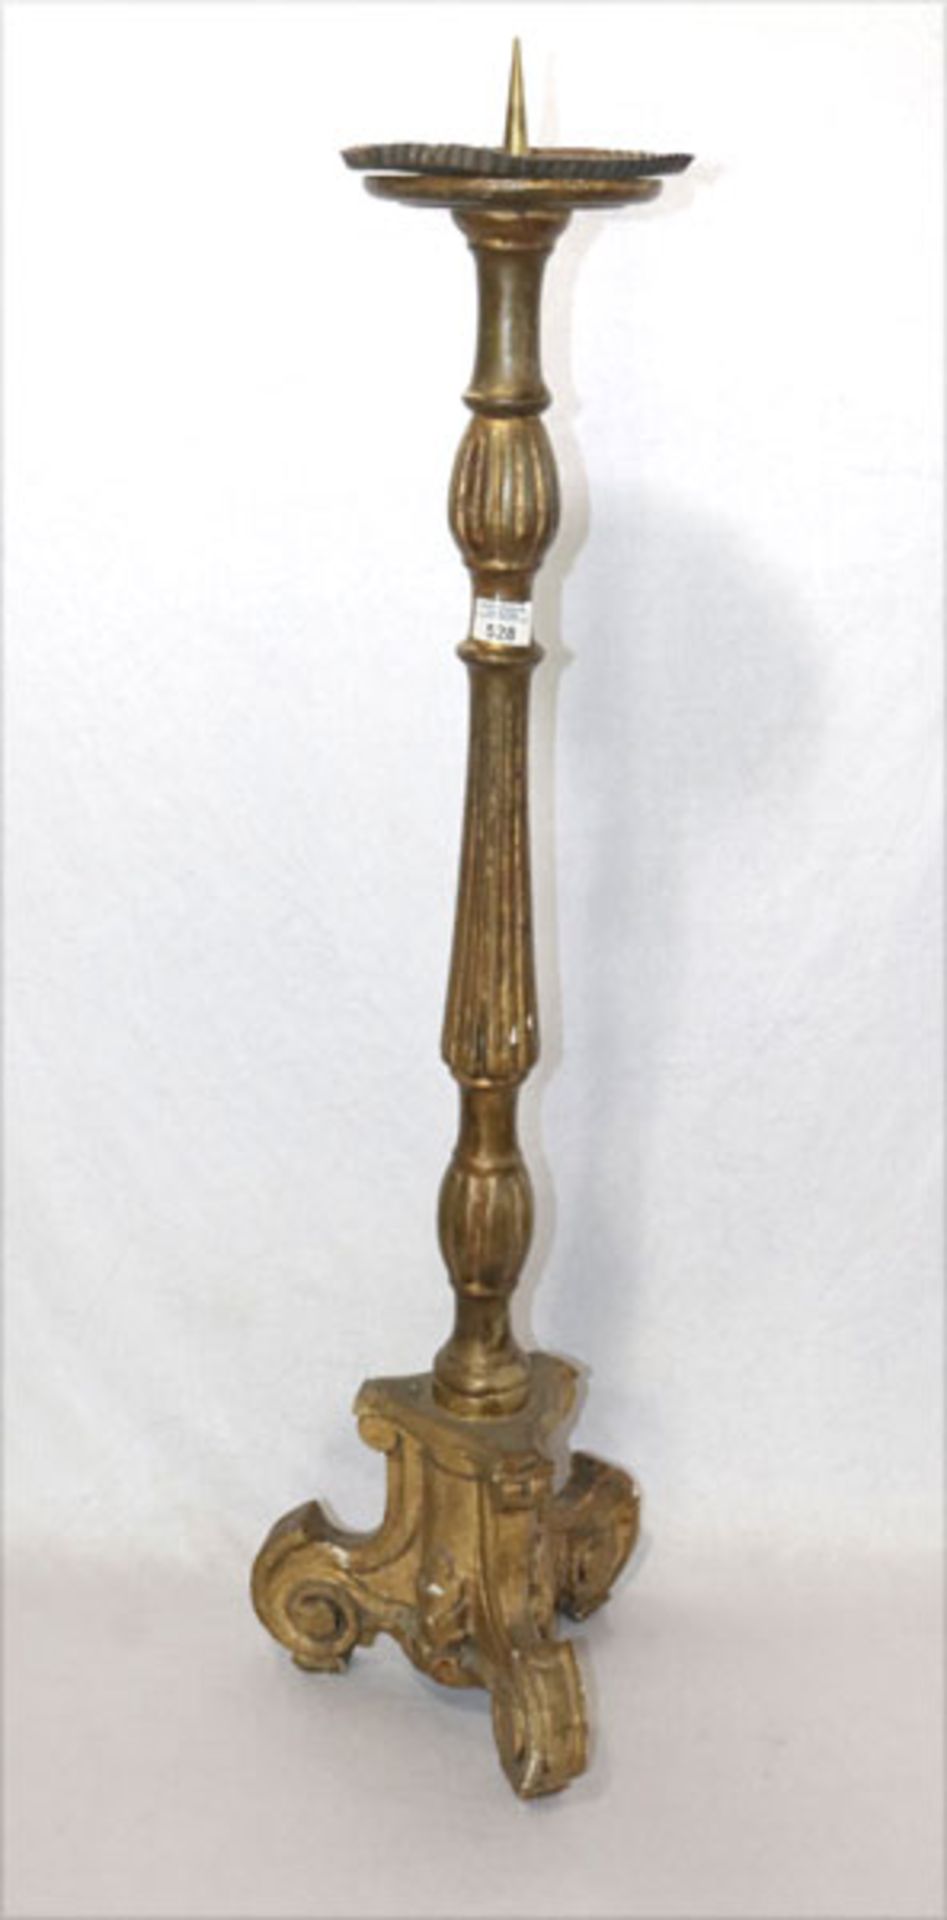 Holz Kerzenleuchter, beschnitzt und gold gefaßt, teils beschädigt, H 105 cm, D 35 cm, 19.